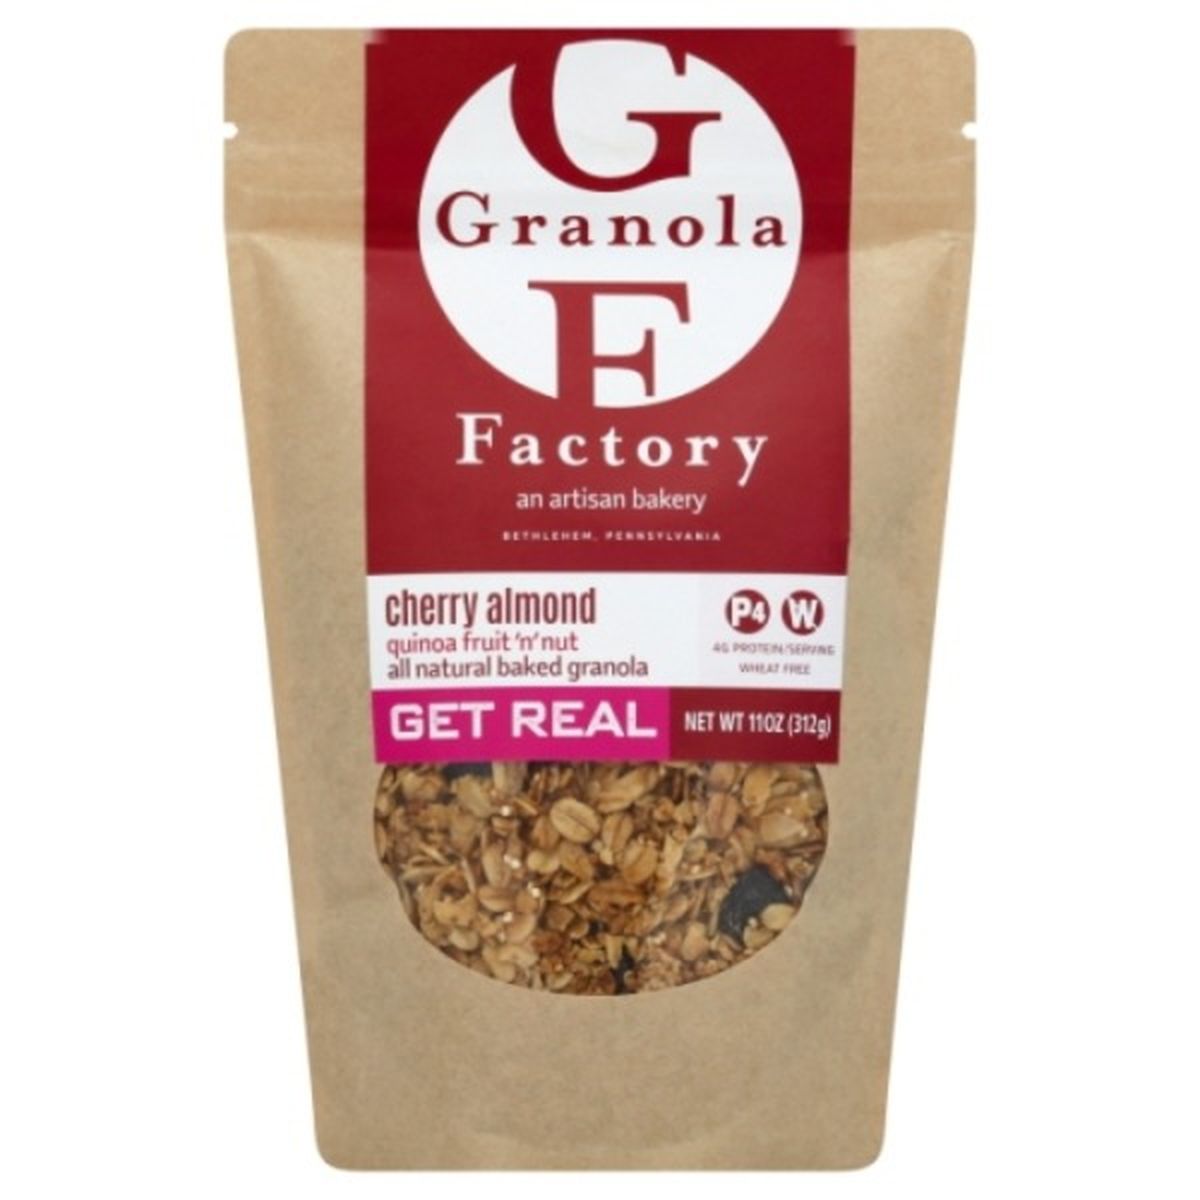 Calories in The Granola Factory Granola, Quinoa Fruit 'N' Nut, Cherry Almond